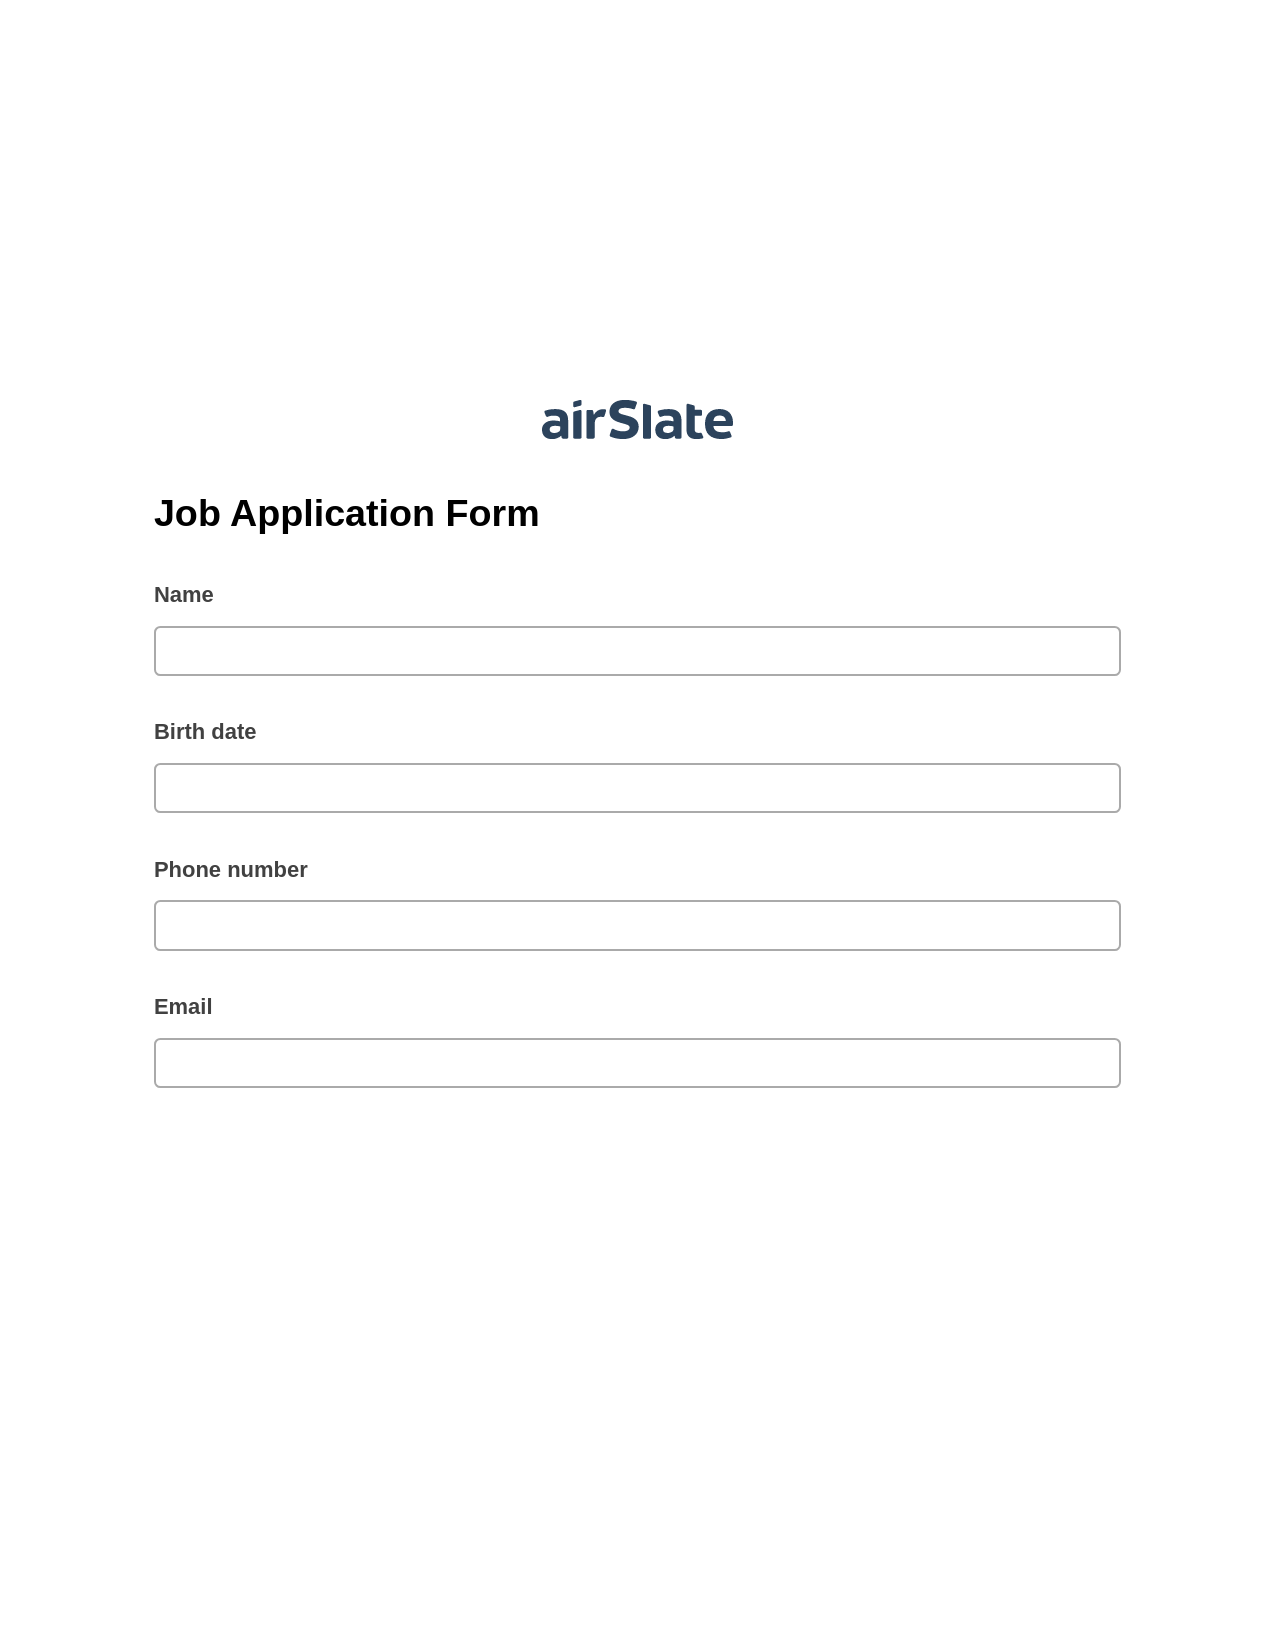 Job Application Form Pre-fill from MySQL Bot, Create slate bot, Export to Smartsheet